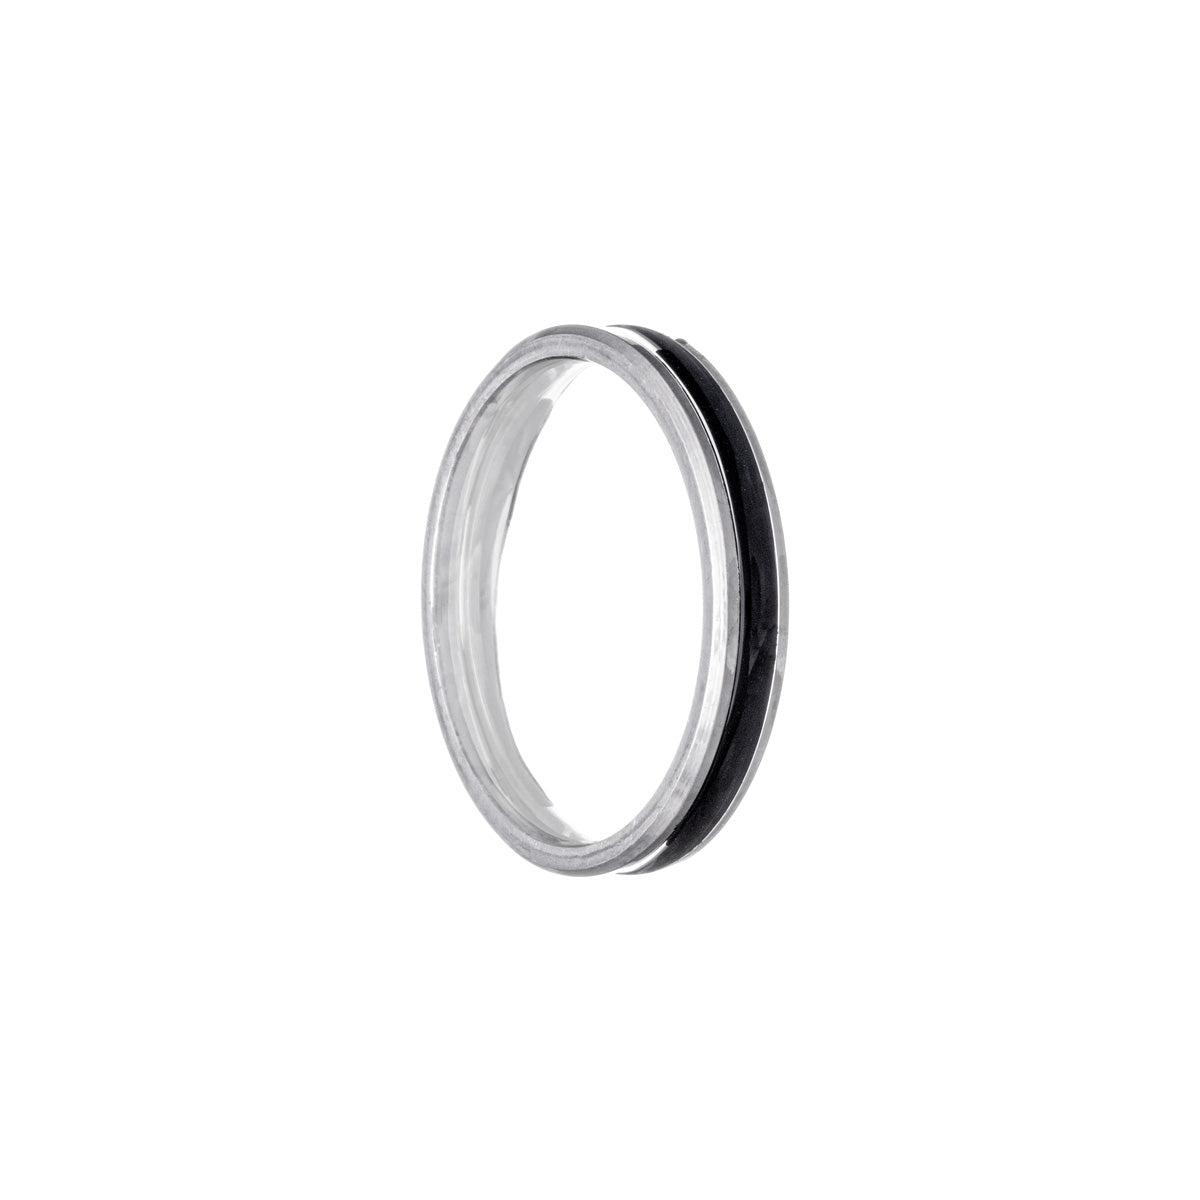 Black striped steel ring 4mm (Steel 316L)